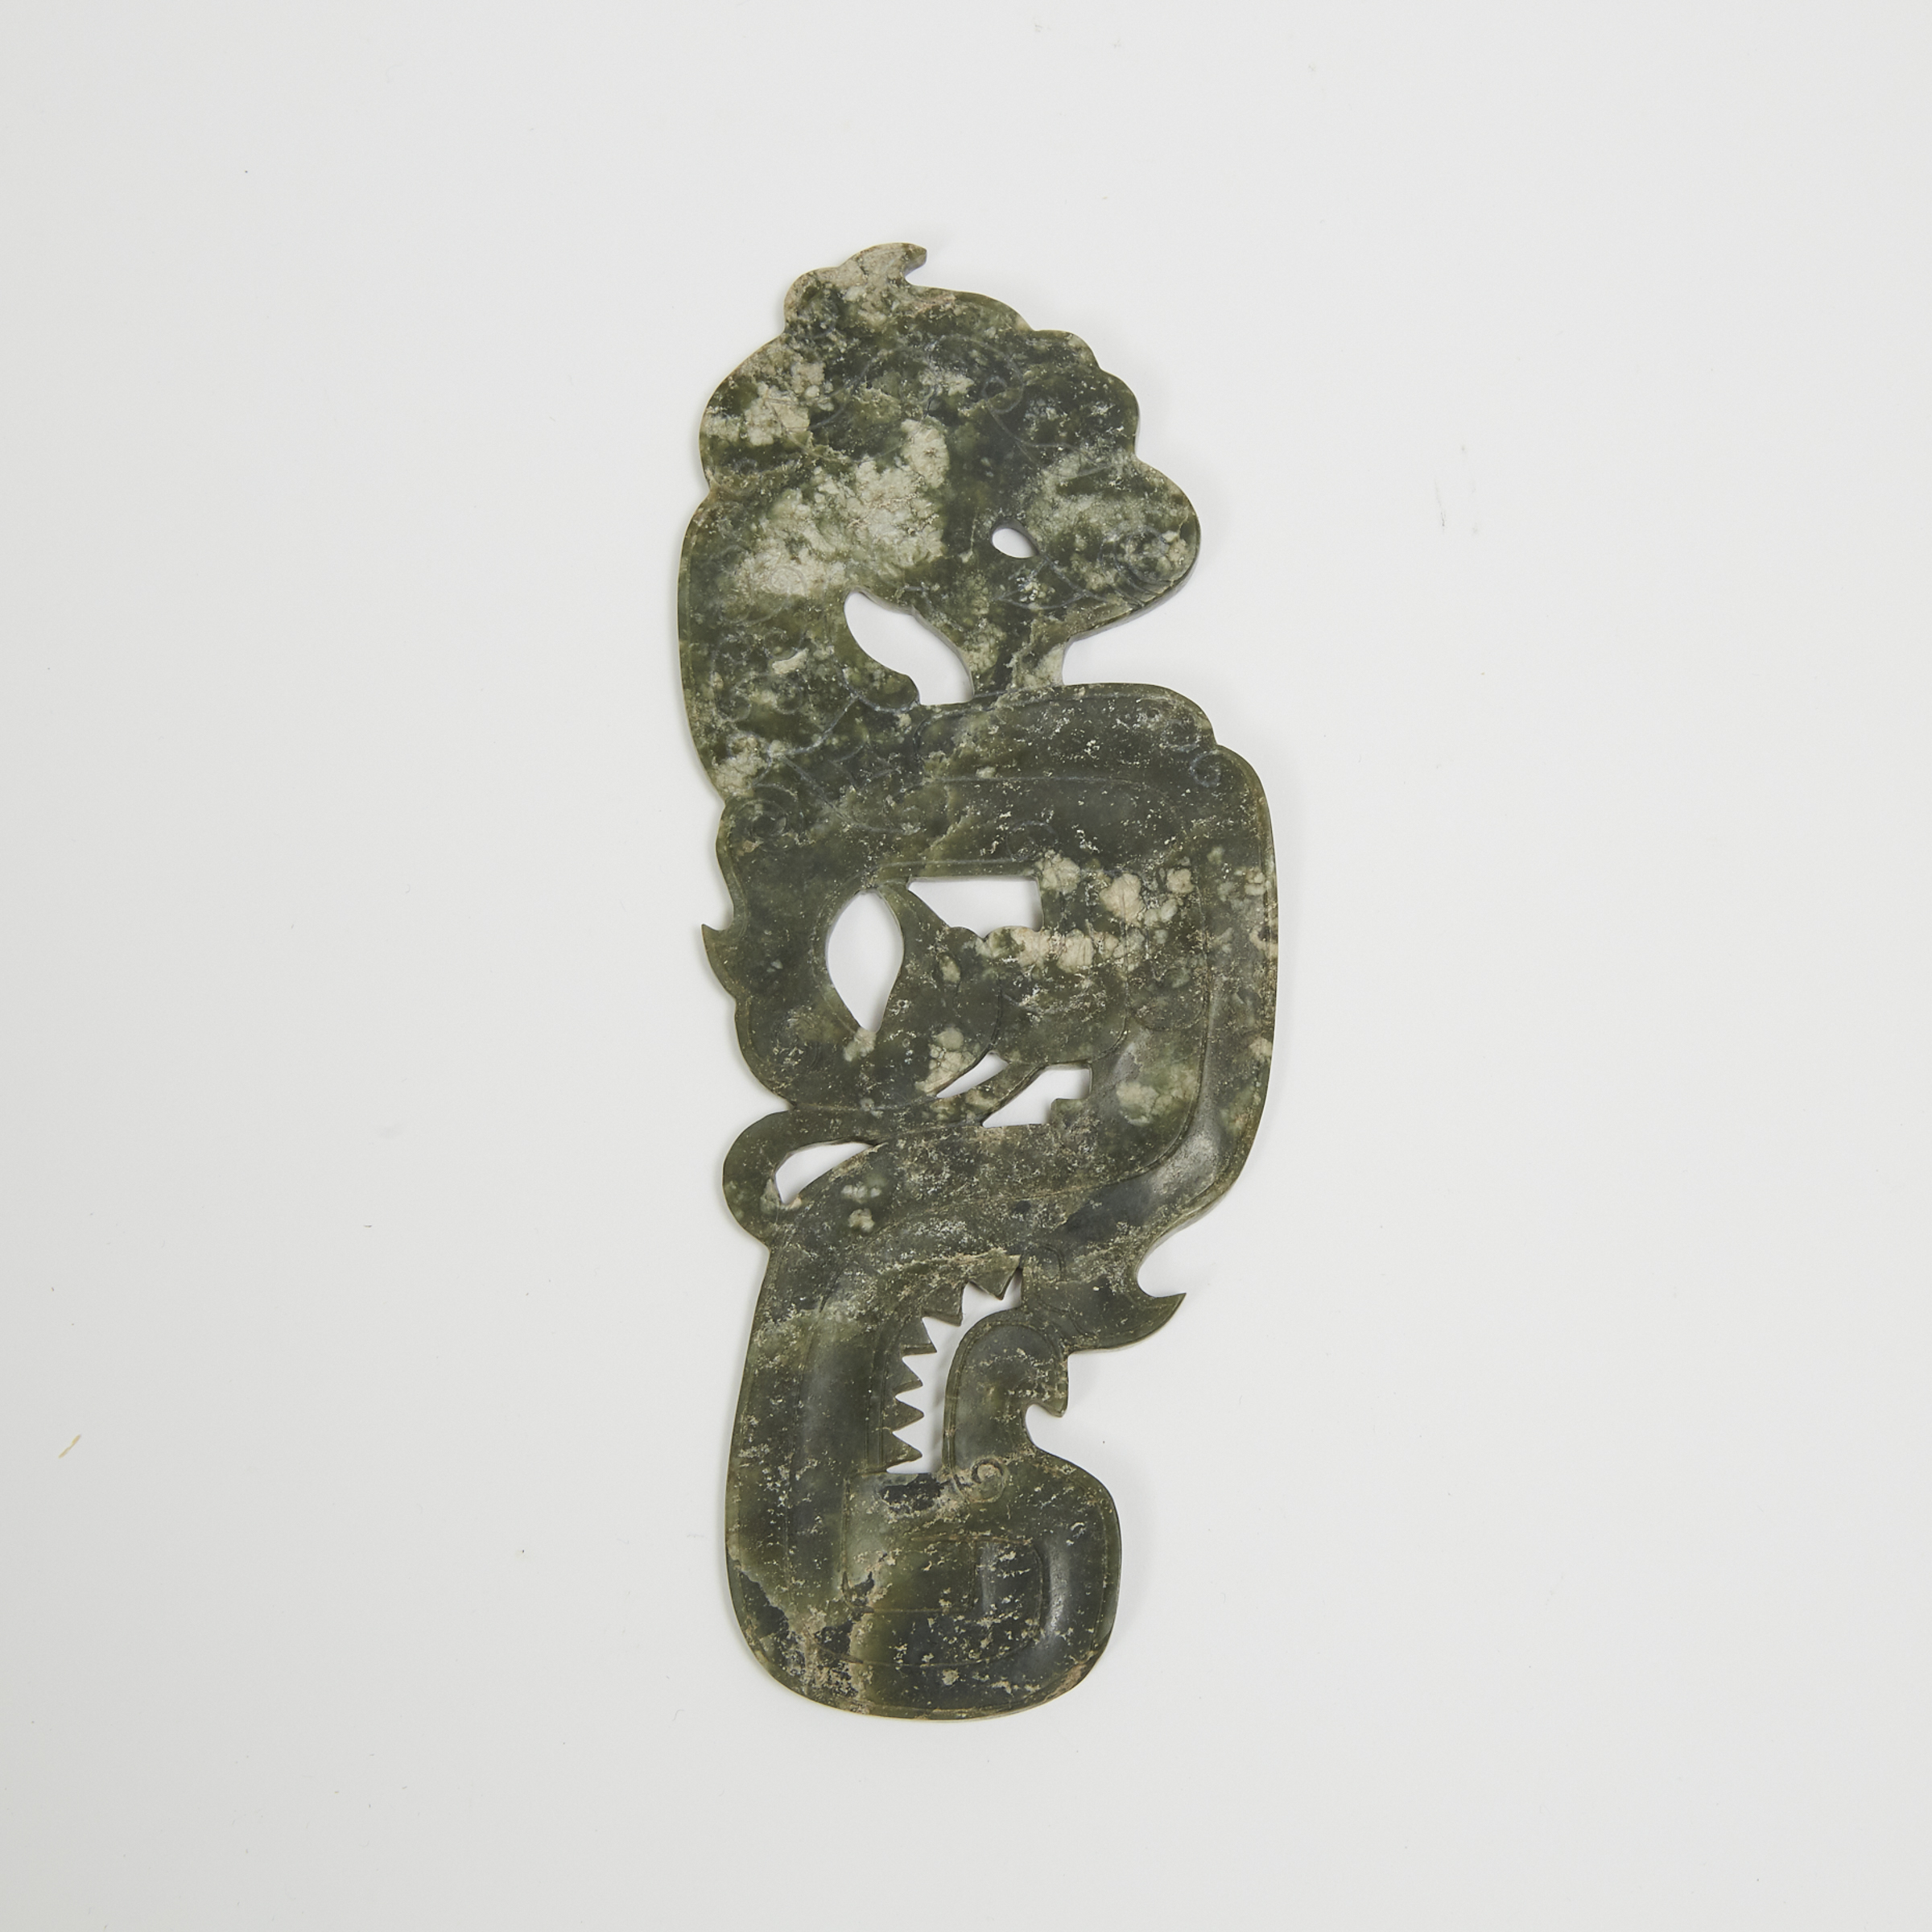 An Archaistic Jade 'Dragon' Plaque, Qing Dynasty or Earlier